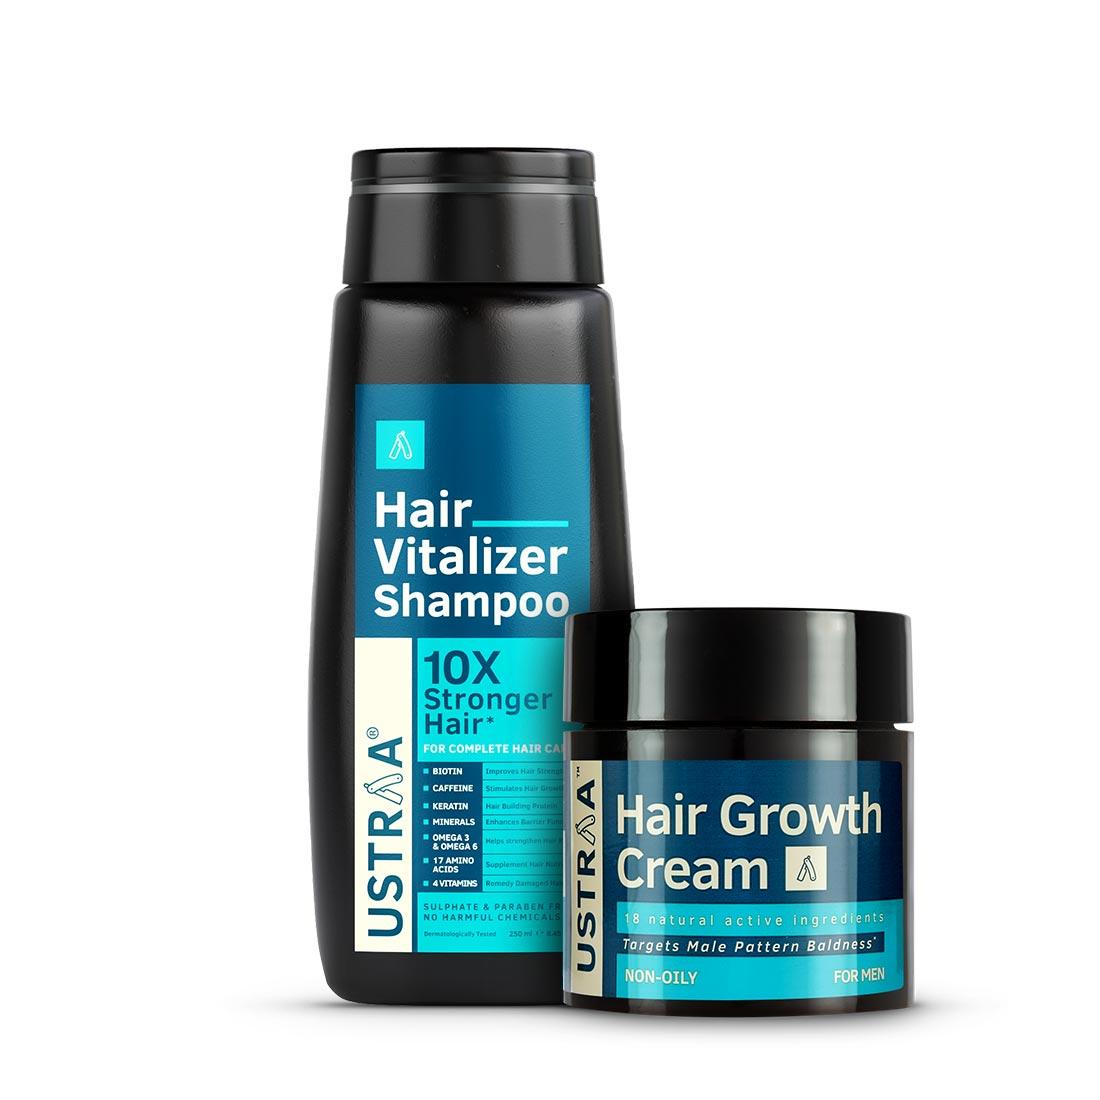 Hair Vitalizer Shampoo & Hair Growth Cream